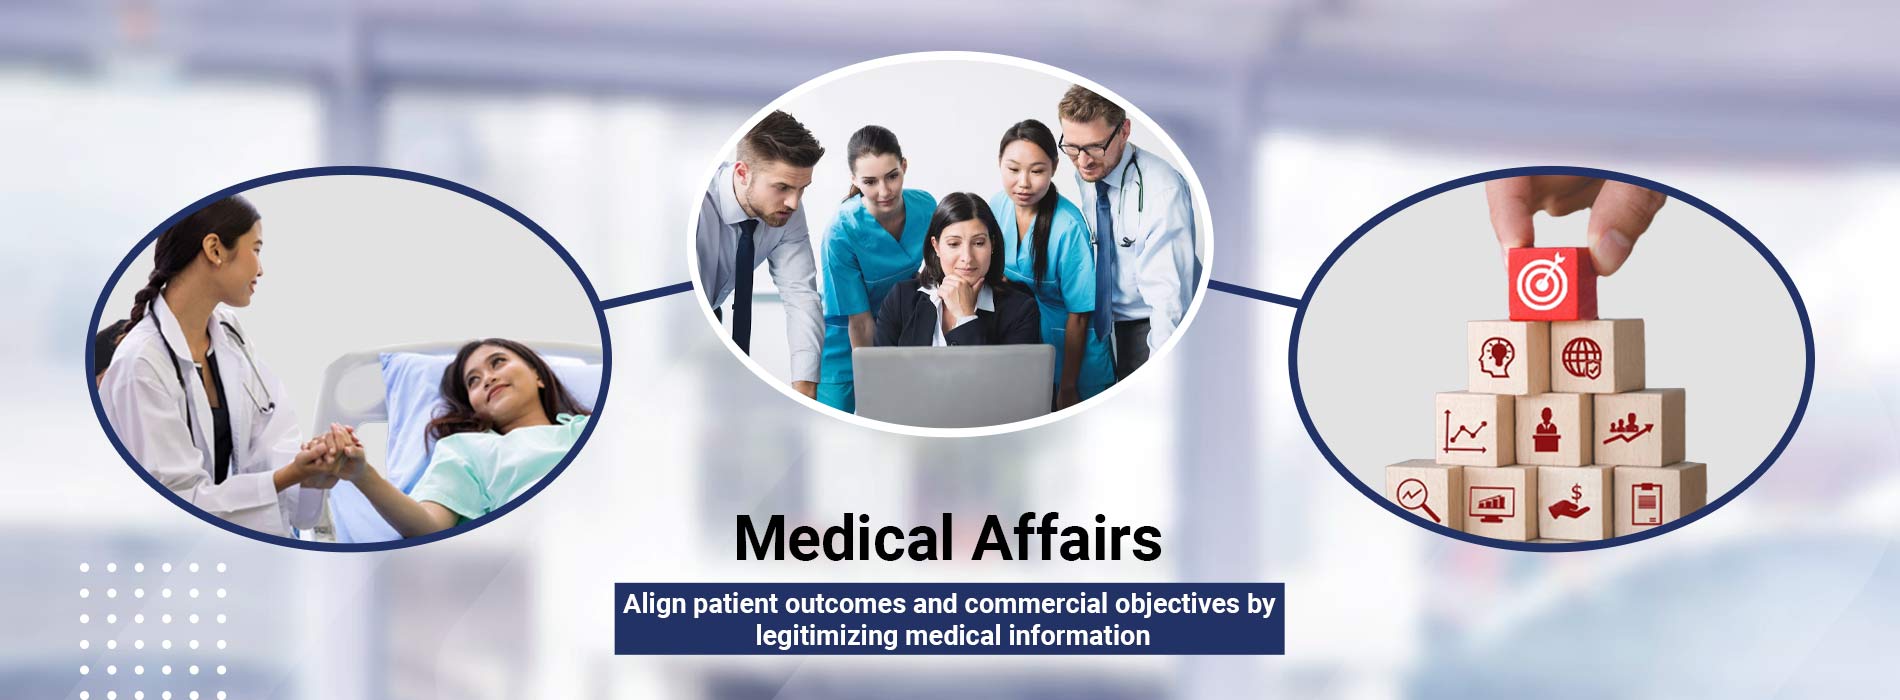 Medical-Affairs